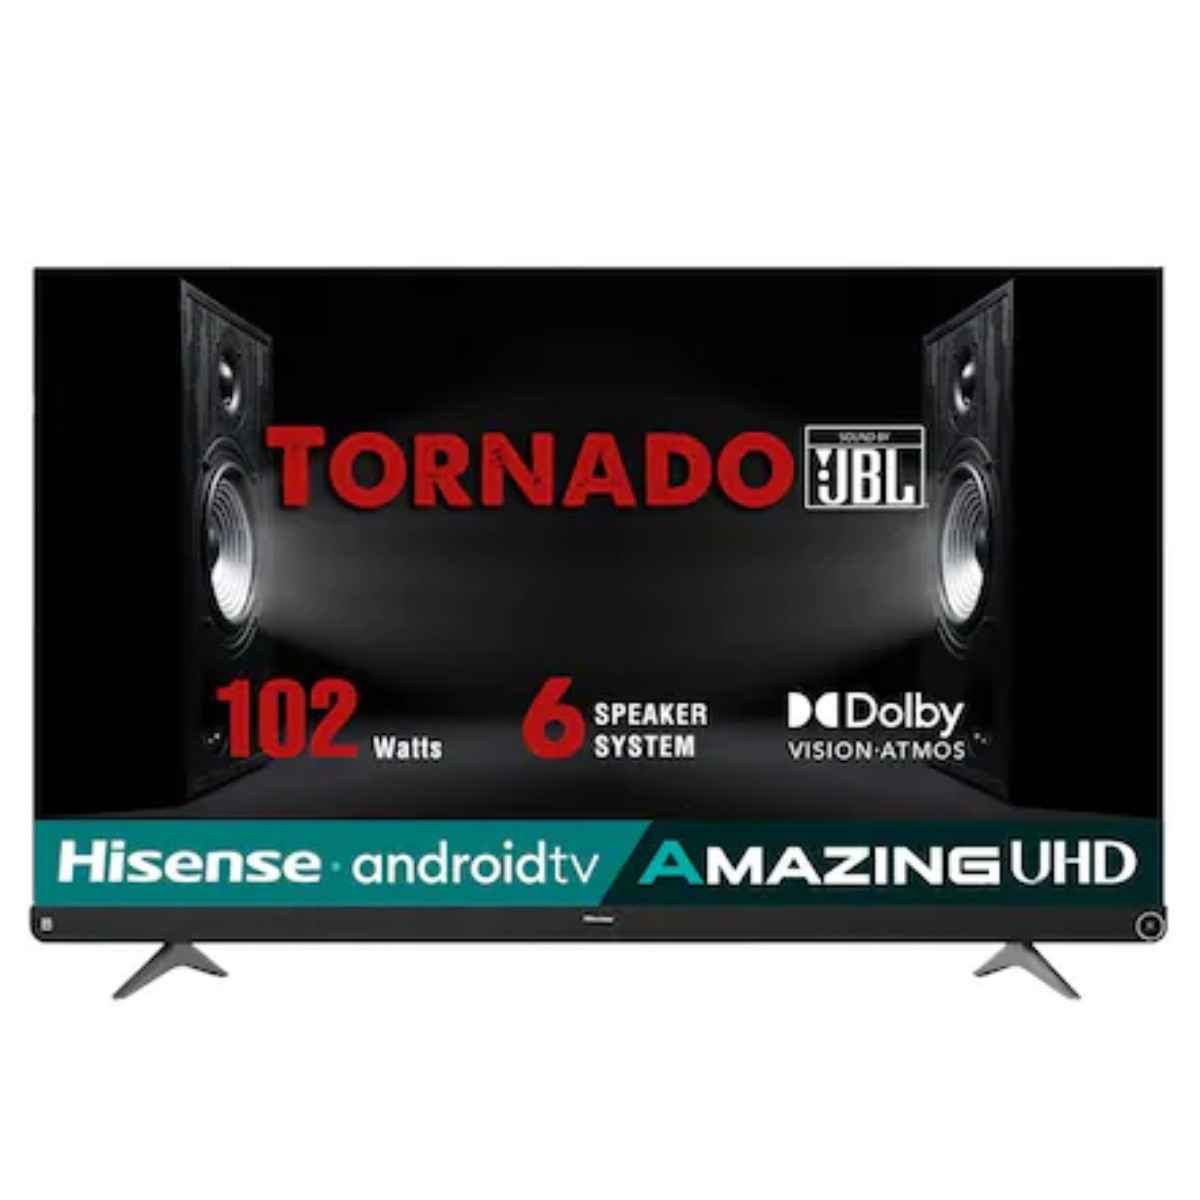 Hisense Tornado 55 inch 4K TV (55A73F)